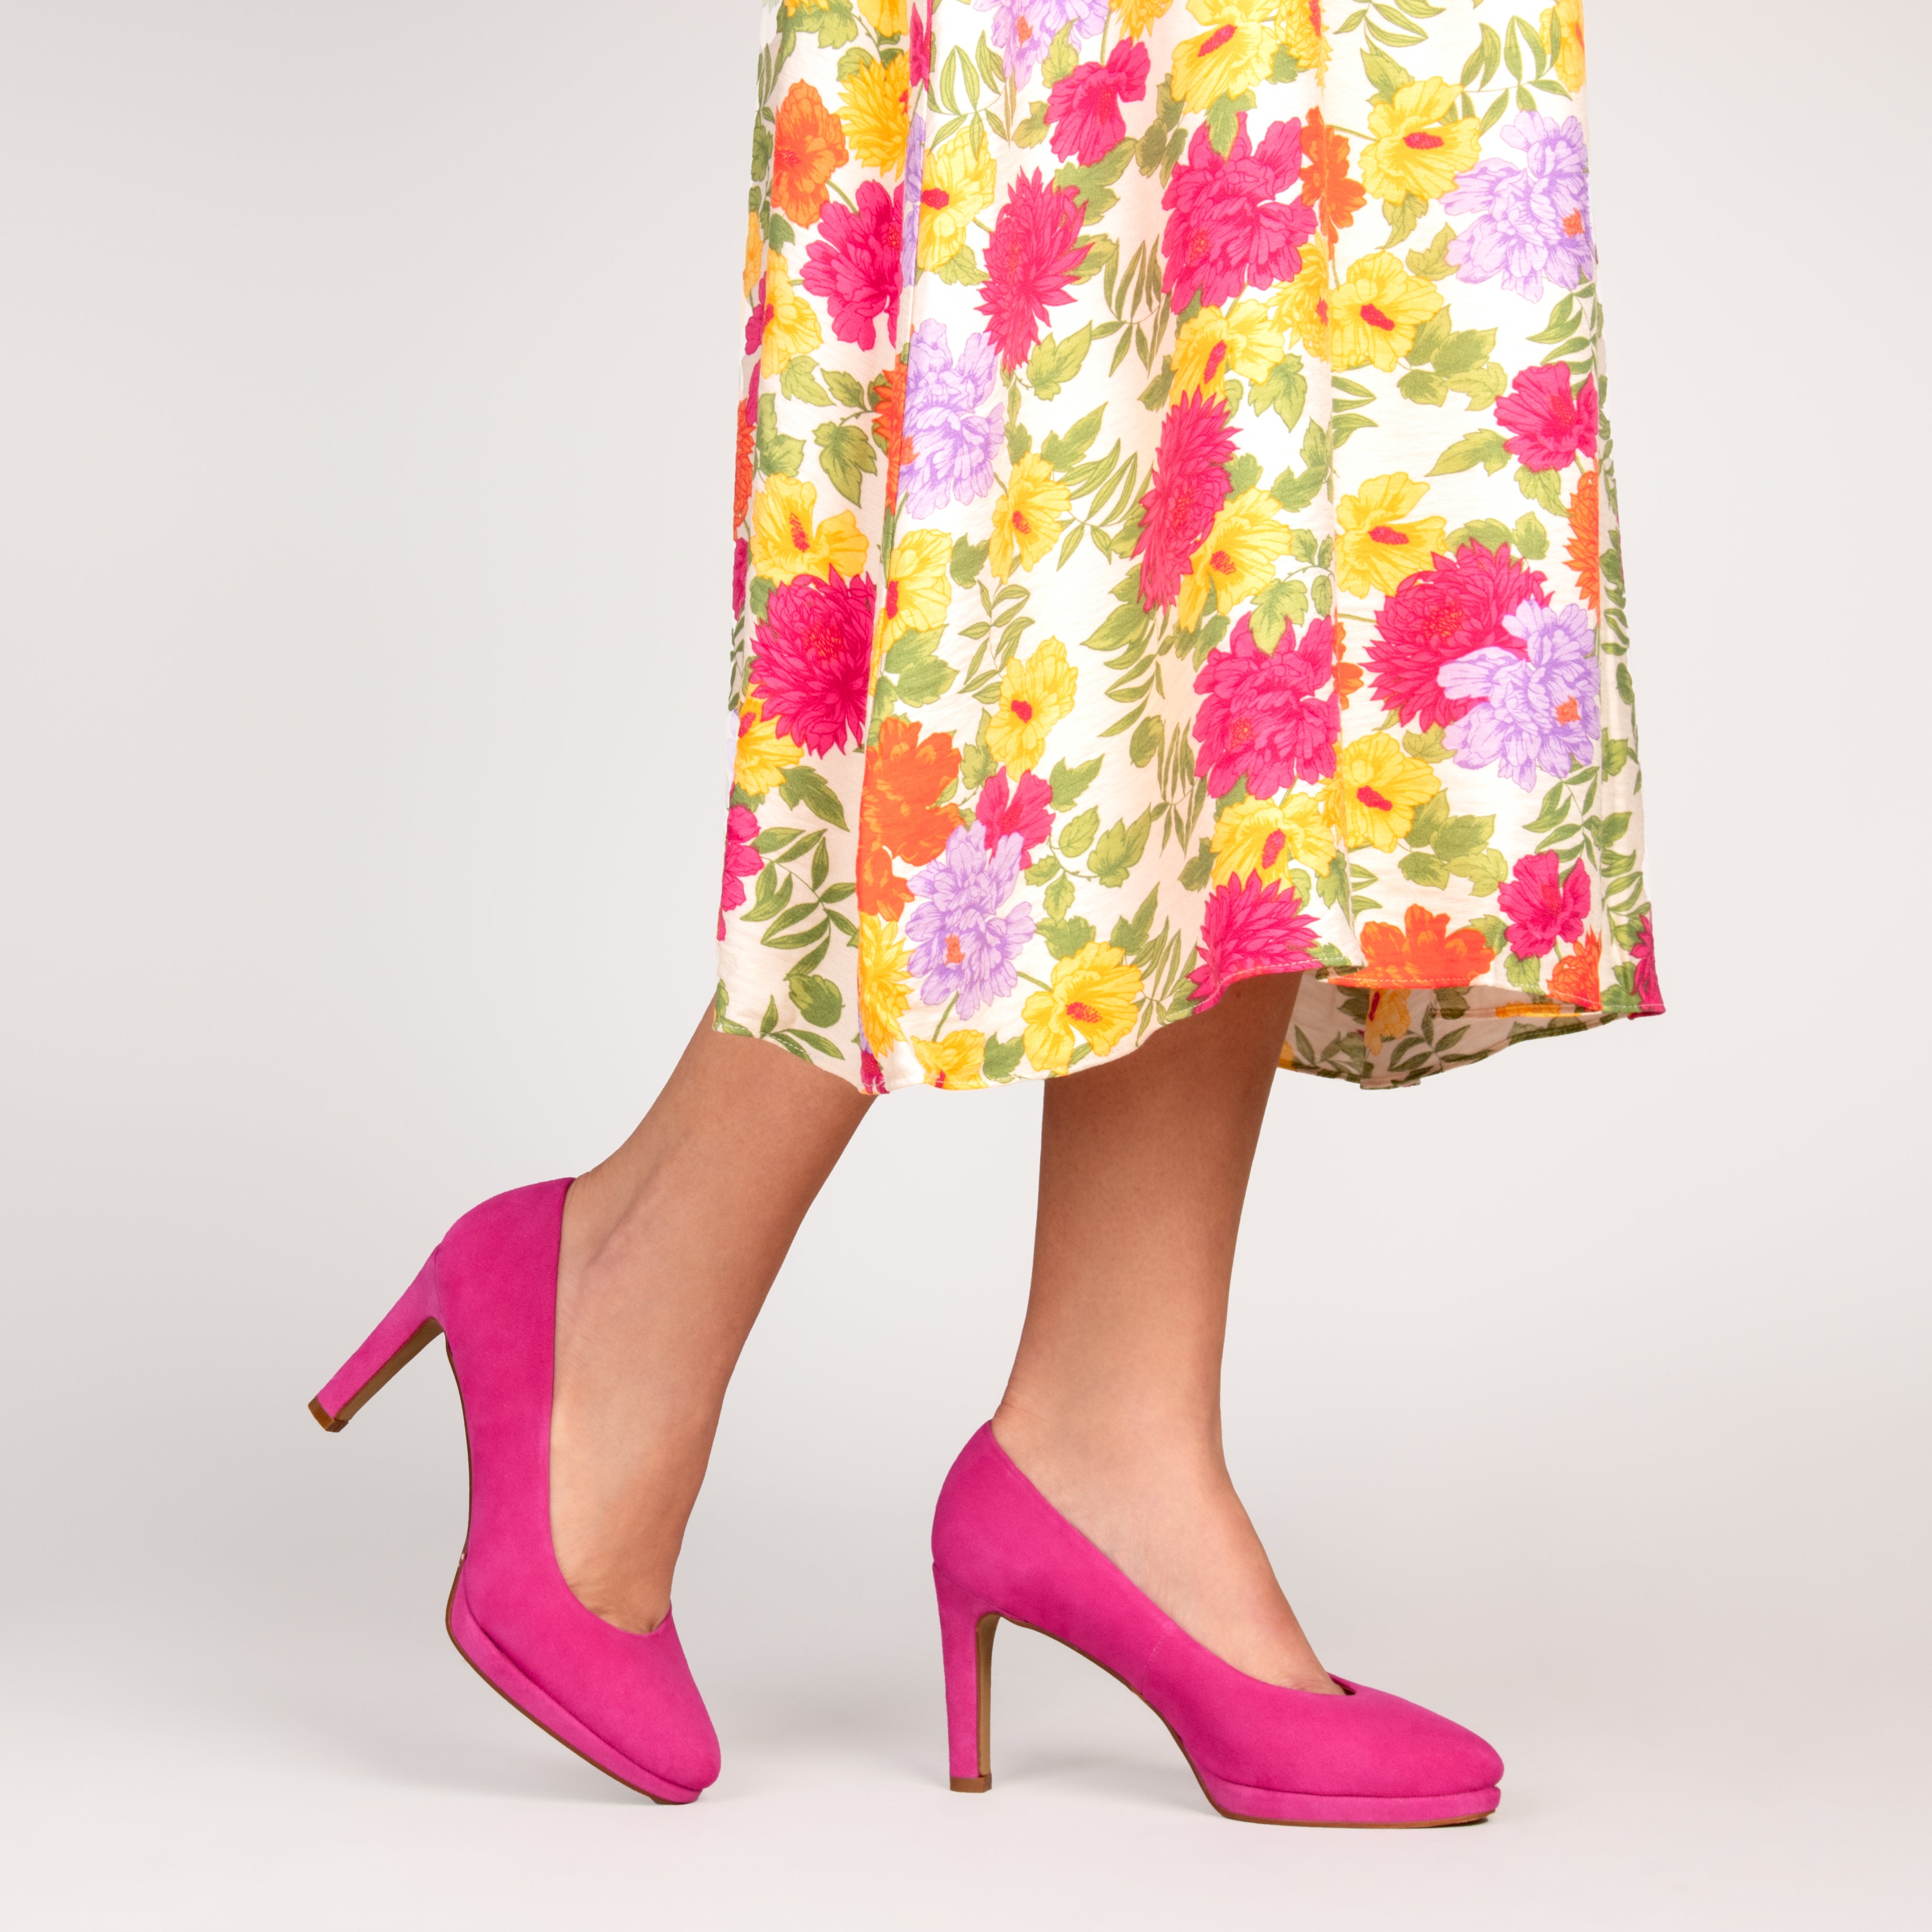 PLATFORM – FUCHSIA high heels with platform